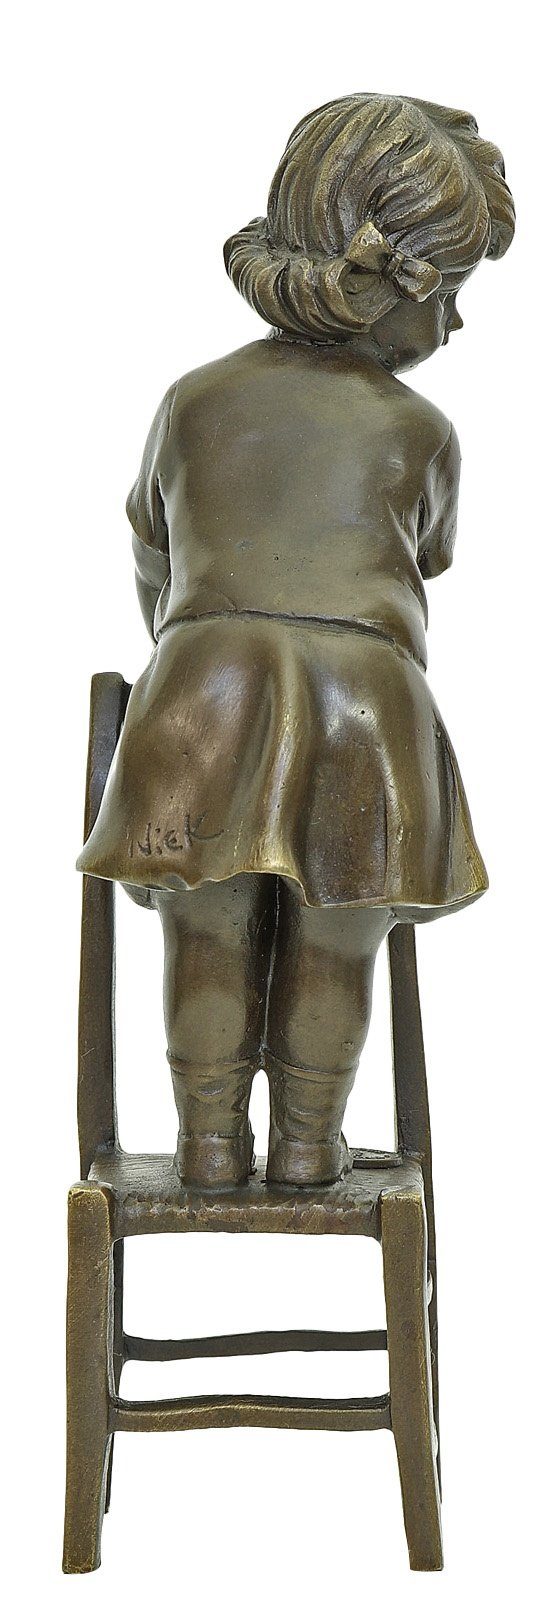 21cm Bronzeskulptur Mädchen Stuhl Kind im Antik-Stil Bronze Figur Statue 